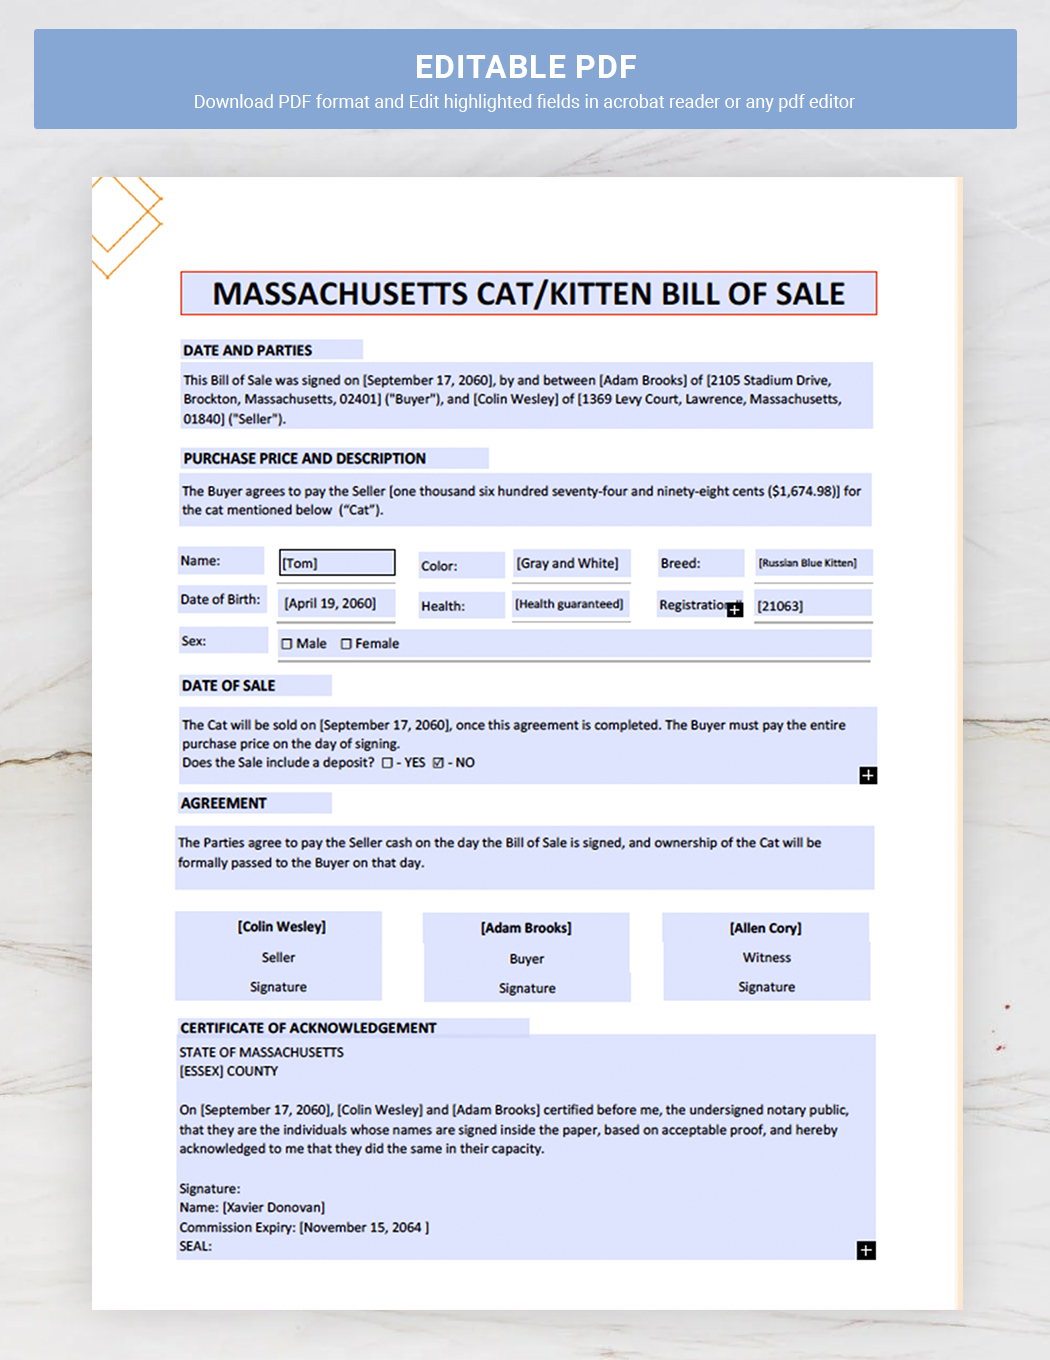 Massachusetts Cat / Kitten Bill of Sale Template